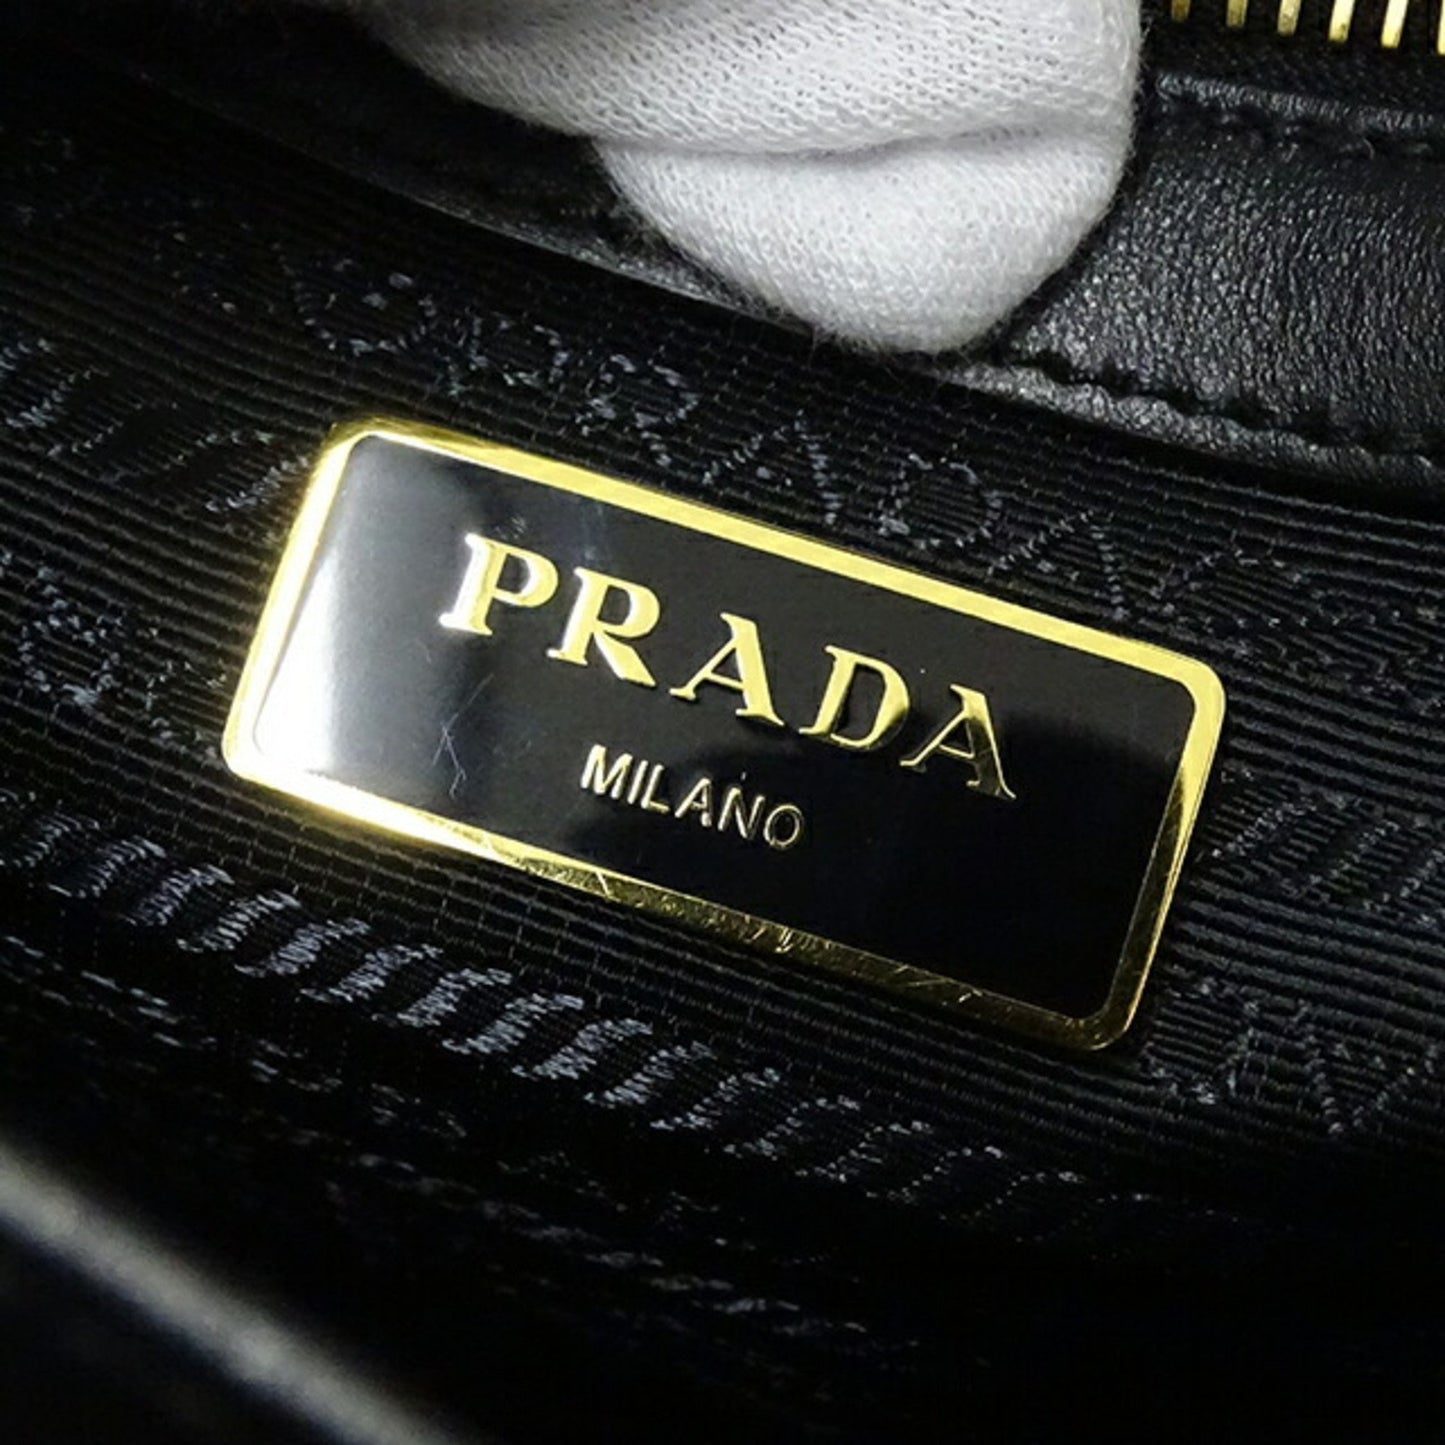 Prada Women's Black Leather Cross-Body Handbag with Clochette and Shoulder Strap in Black